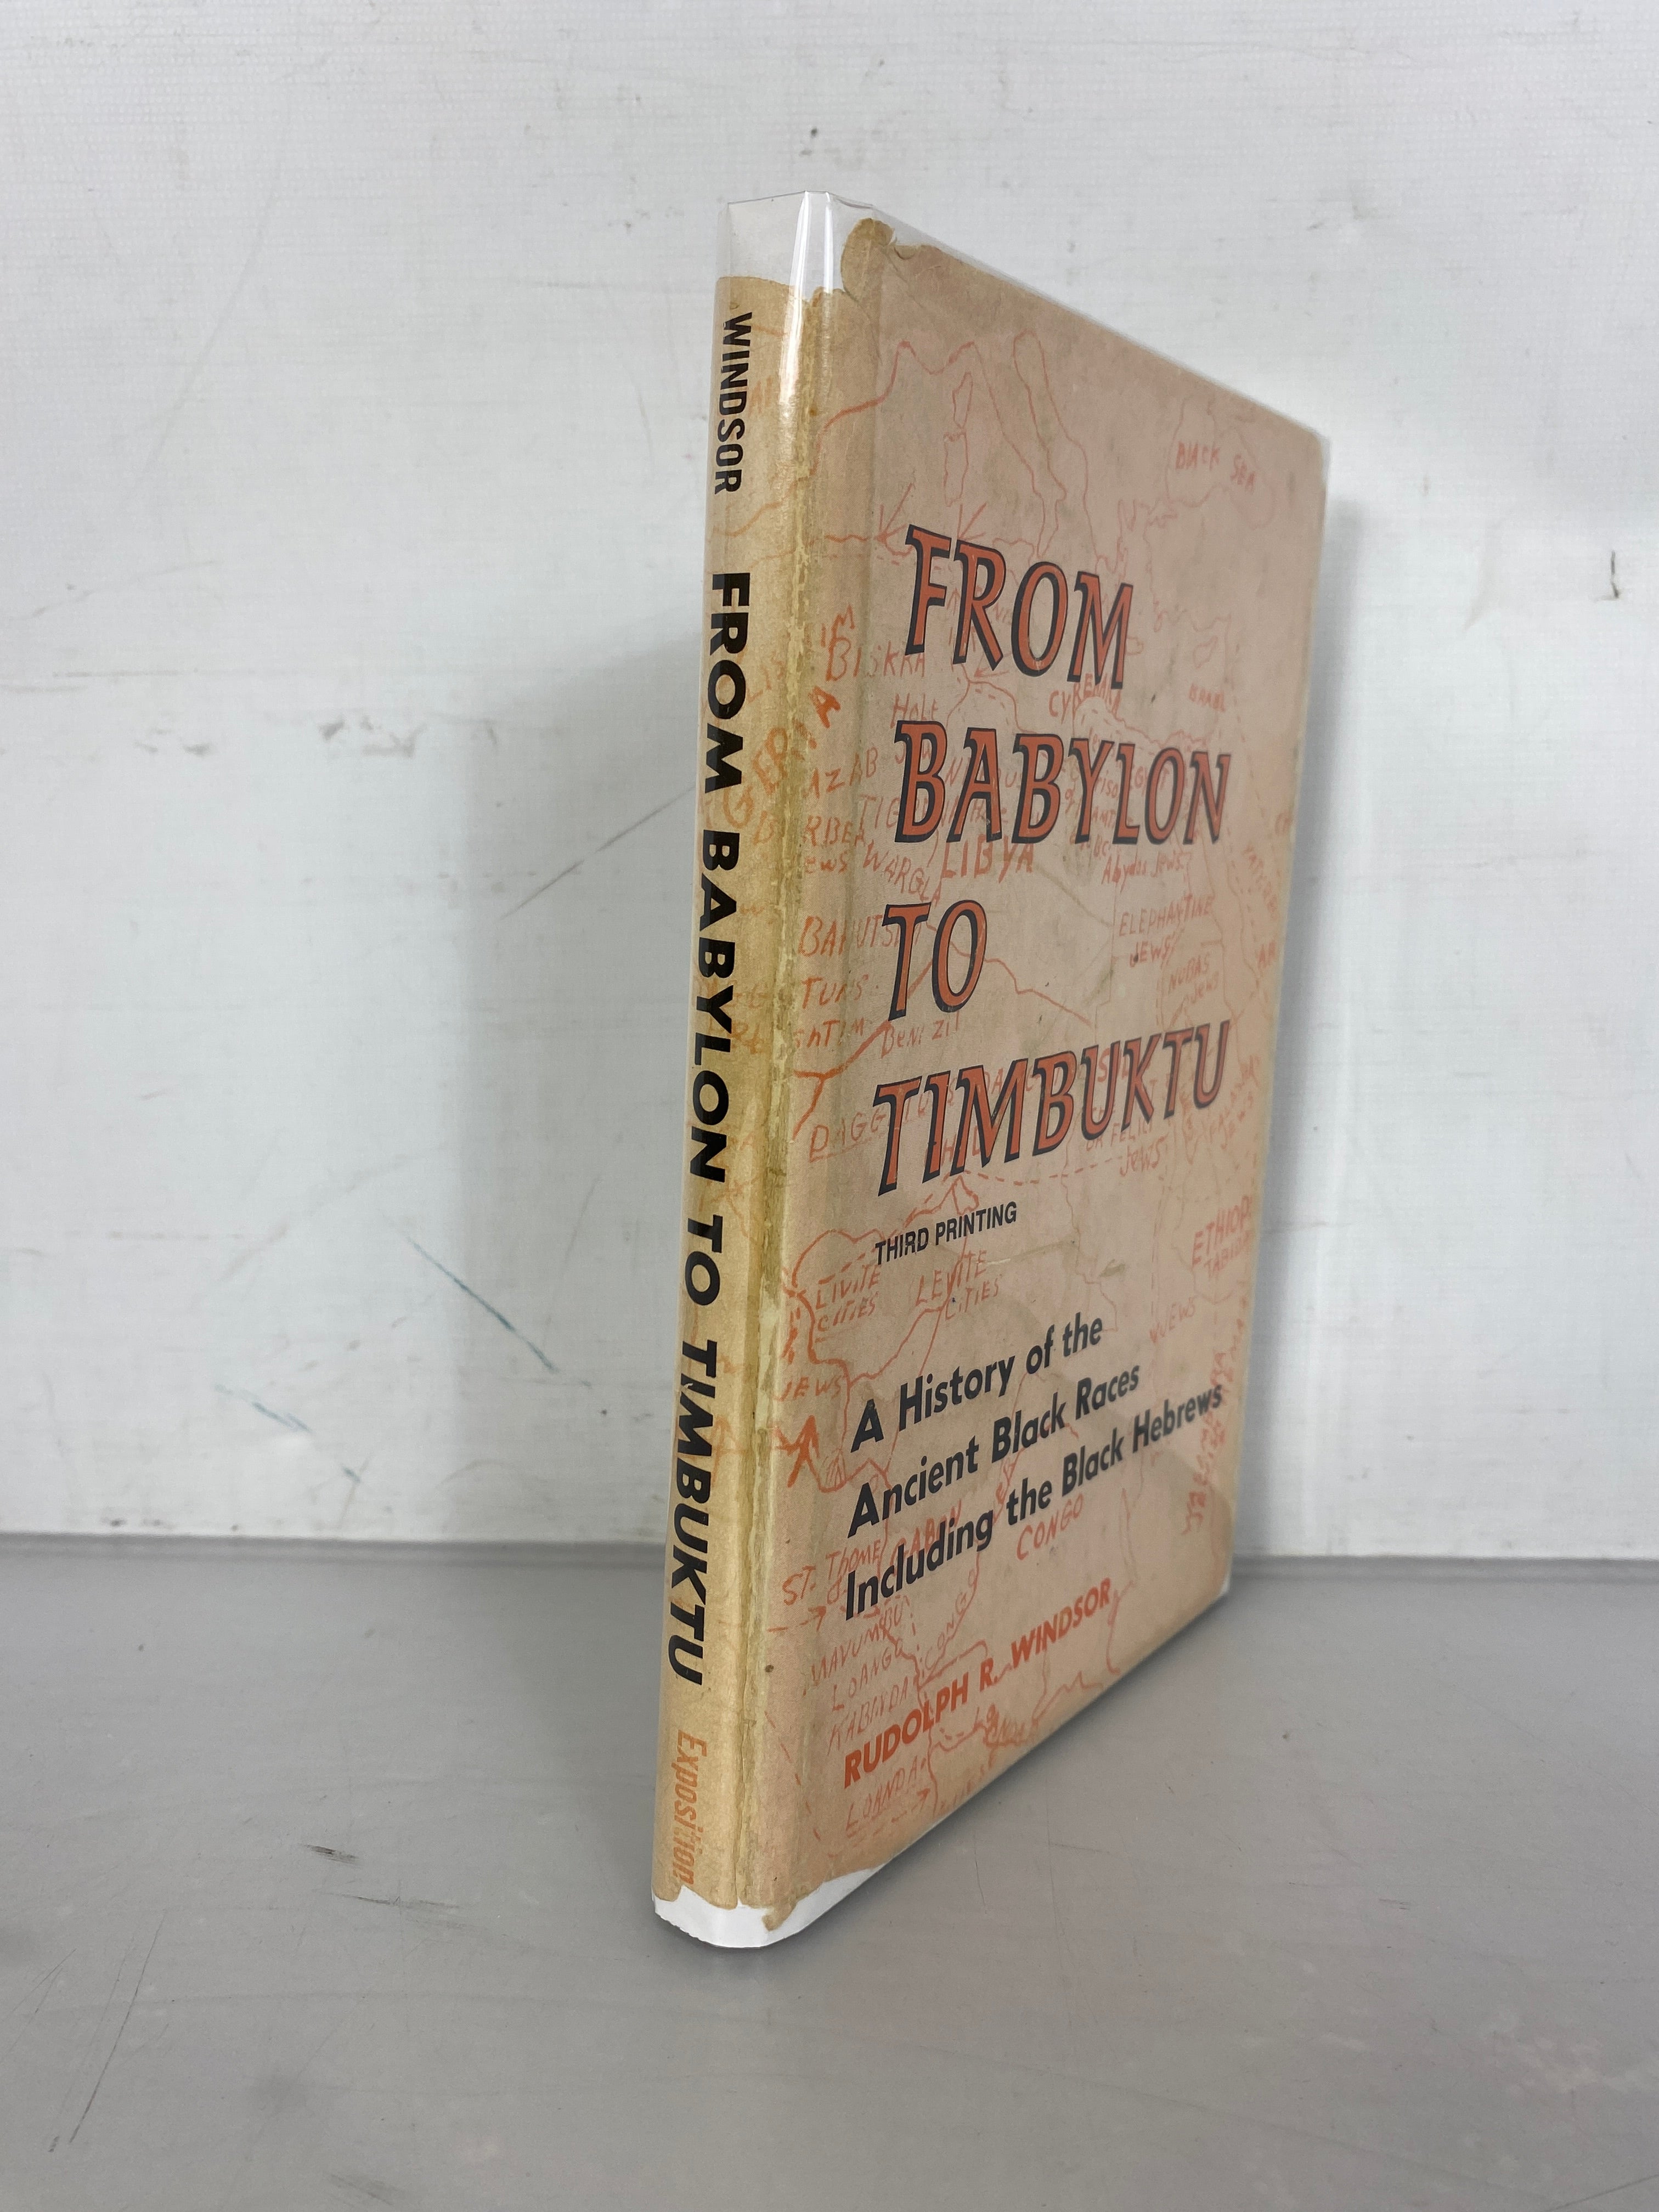 From Babylon to Timbuktu by Rudolph Windsor 1976 Third Printing HC DJ